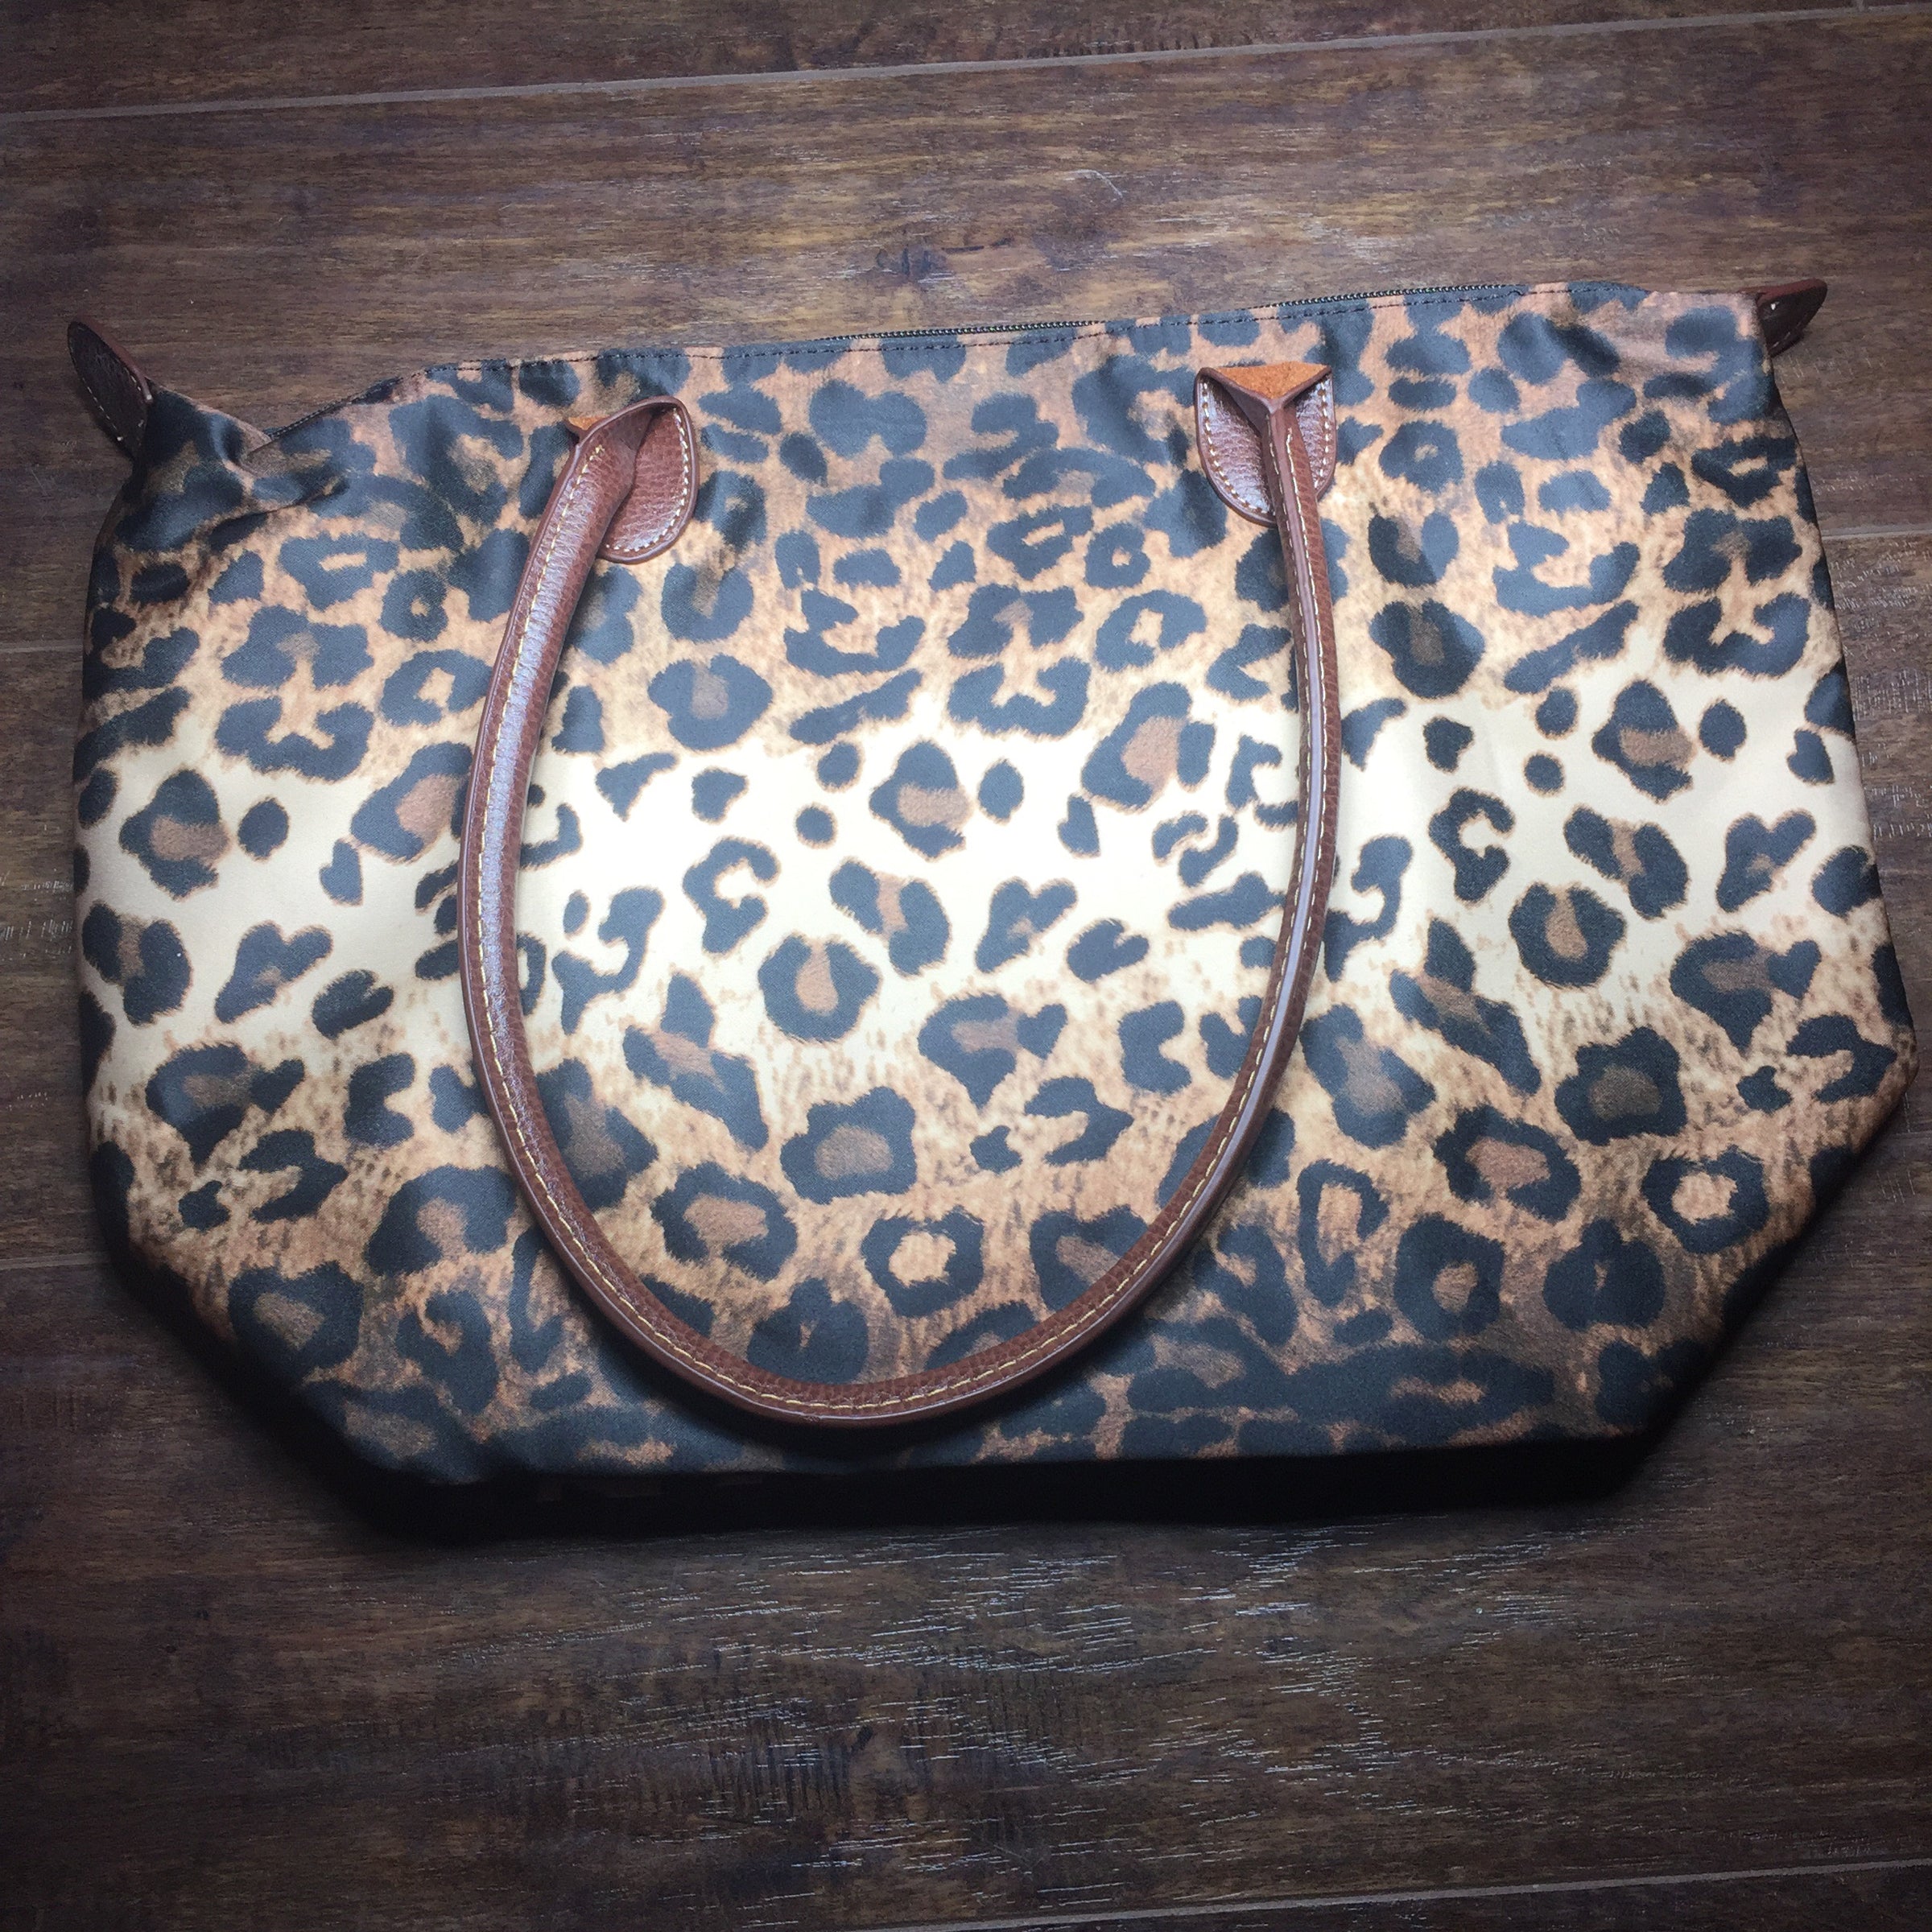 Buy Leopard Print Cheetah Pink Purse for Women Evening Handbag Crossbody  Bags Shoulder Bags Tote Bag Chain Bag at Amazon.in